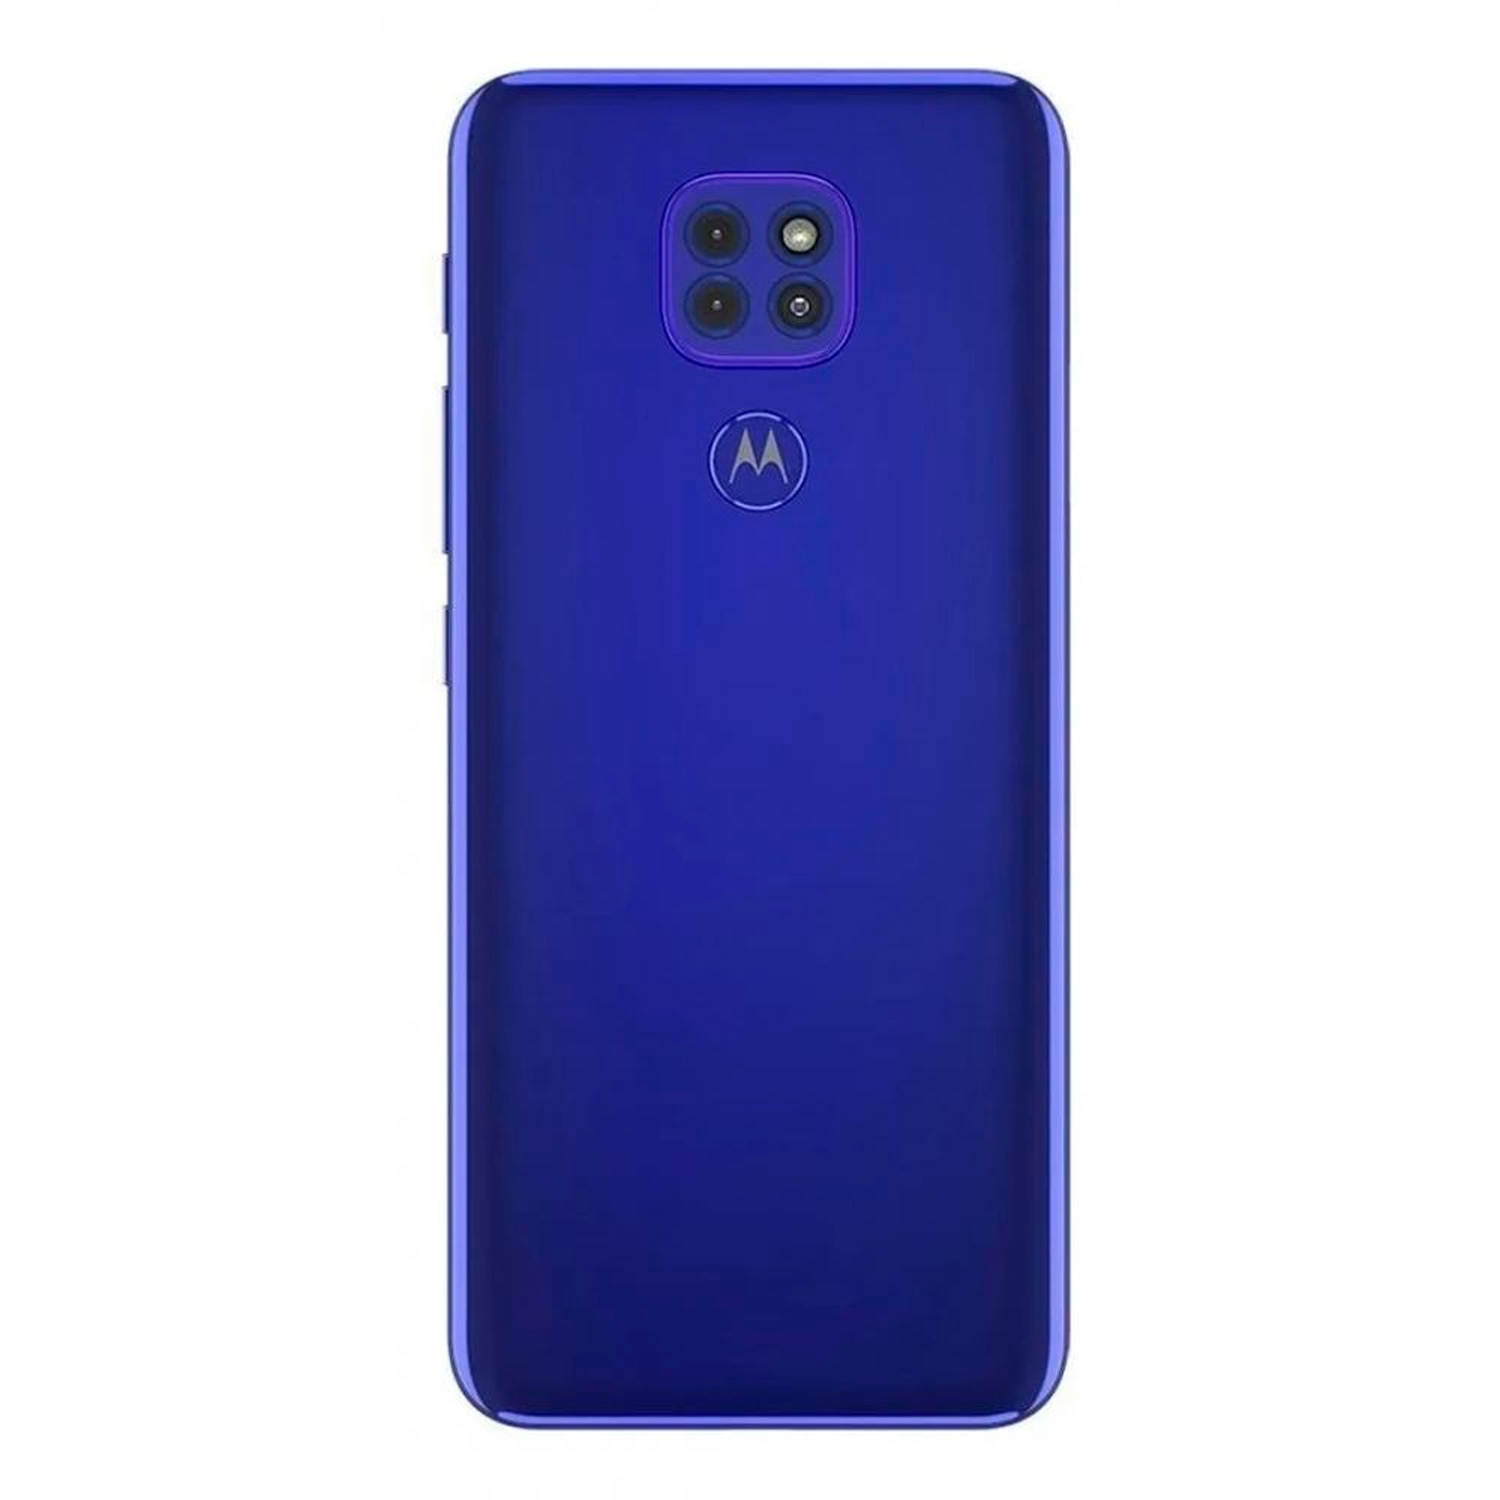 Celular Motorola G9 Play 64GB Azul + OBSEQUIO